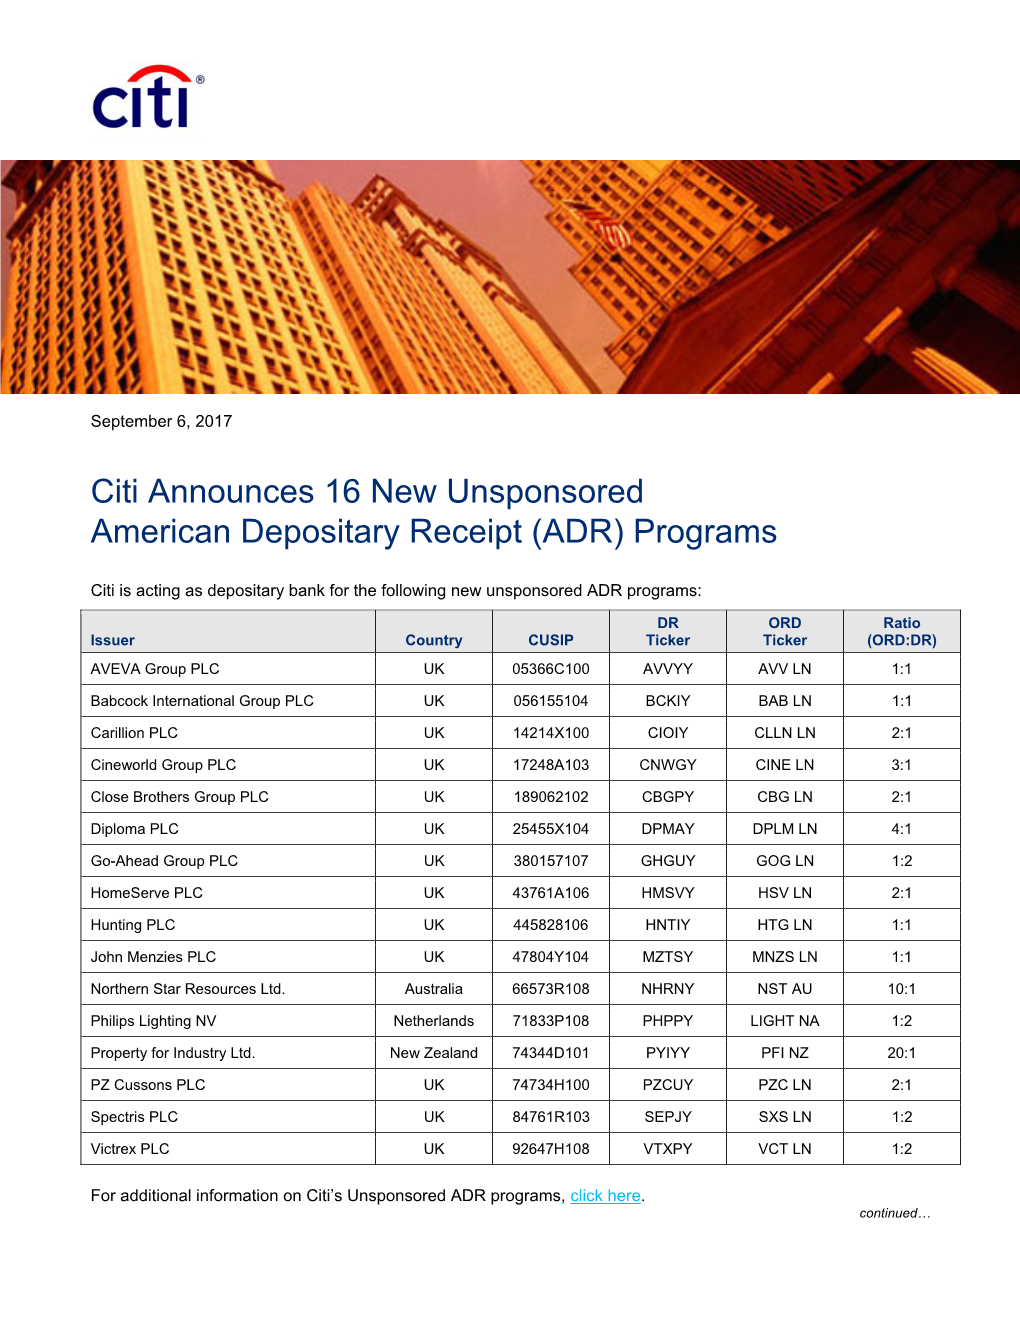 Citi Announces 16 New Unsponsored American Depositary Receipt (ADR) Programs